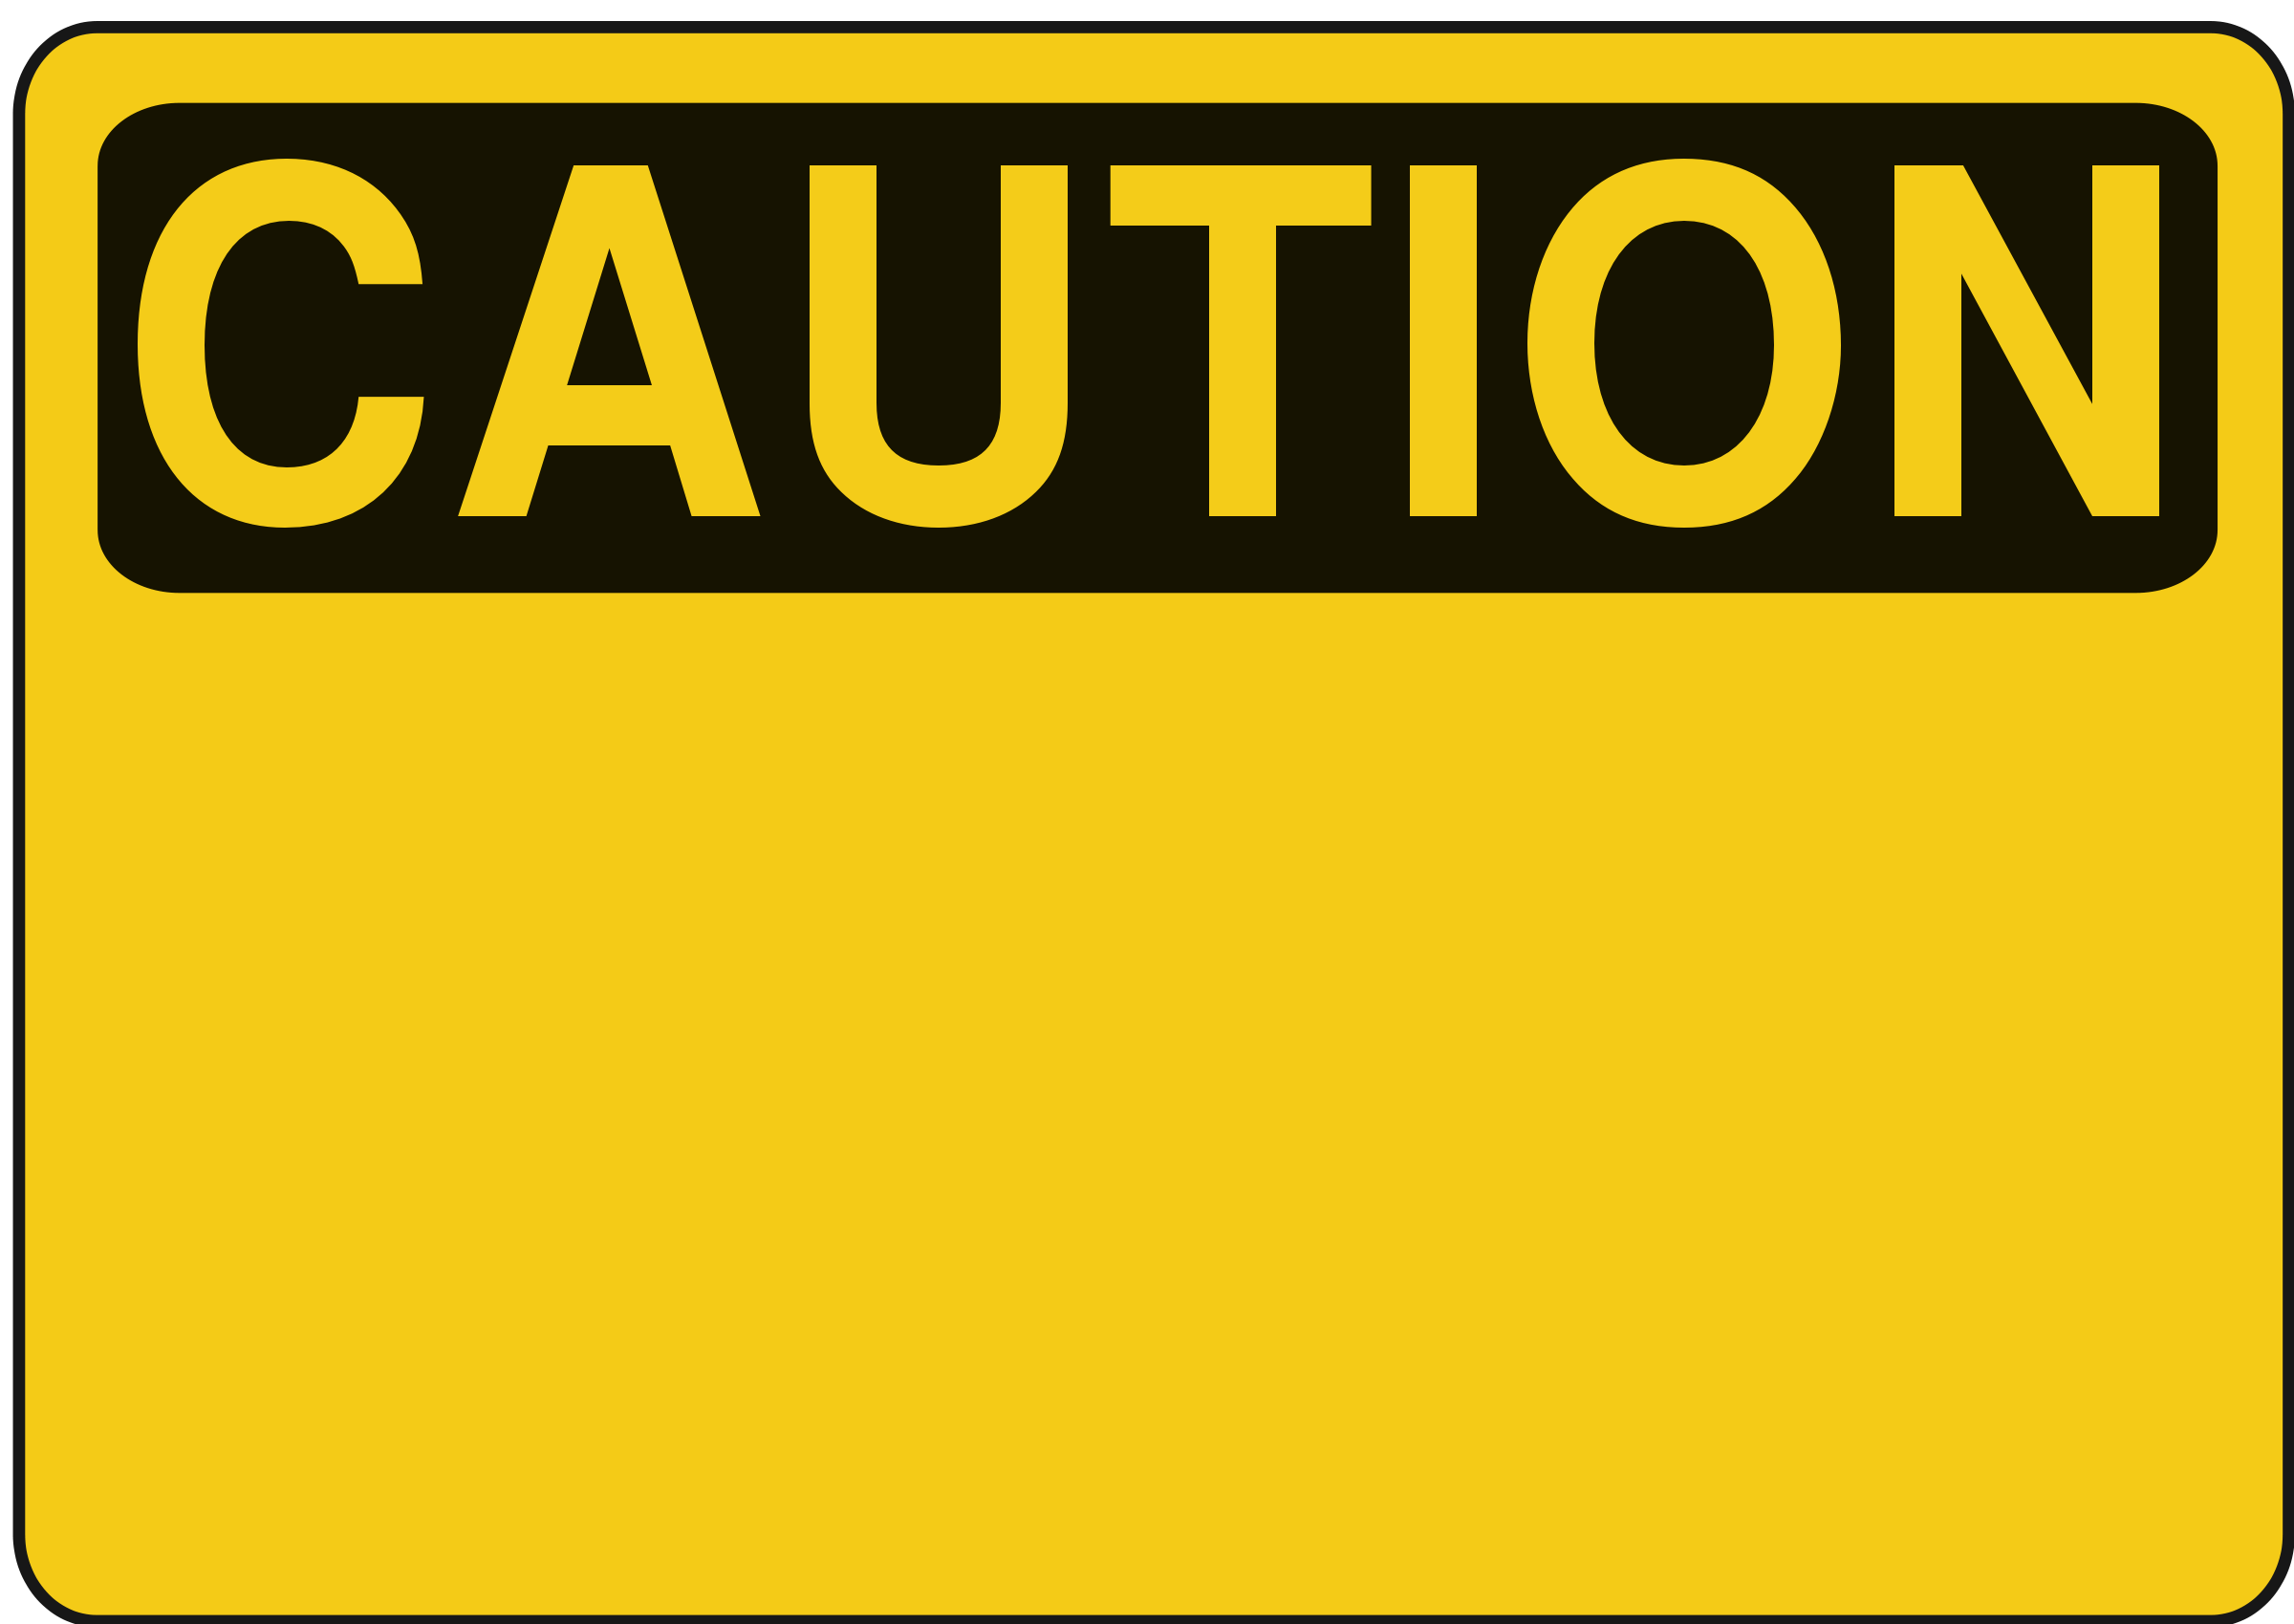 Warning sign clipart 